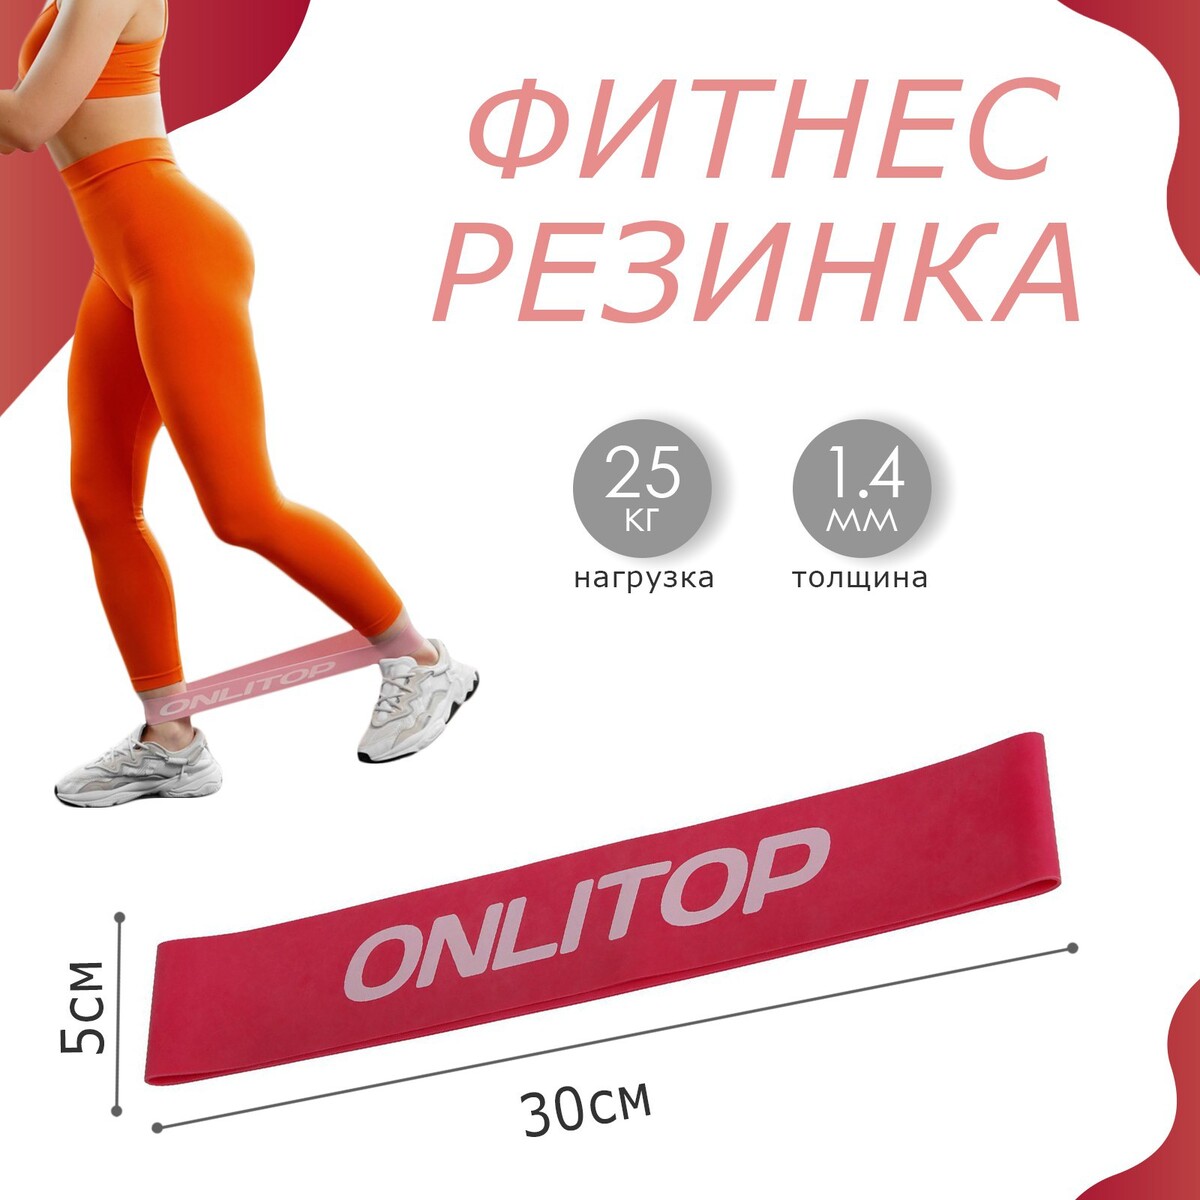 Фитнес-резинка onlitop, 30х5х0,14 см, нагрузка 25 кг, цвет малиновый кикимора из фитнес центра